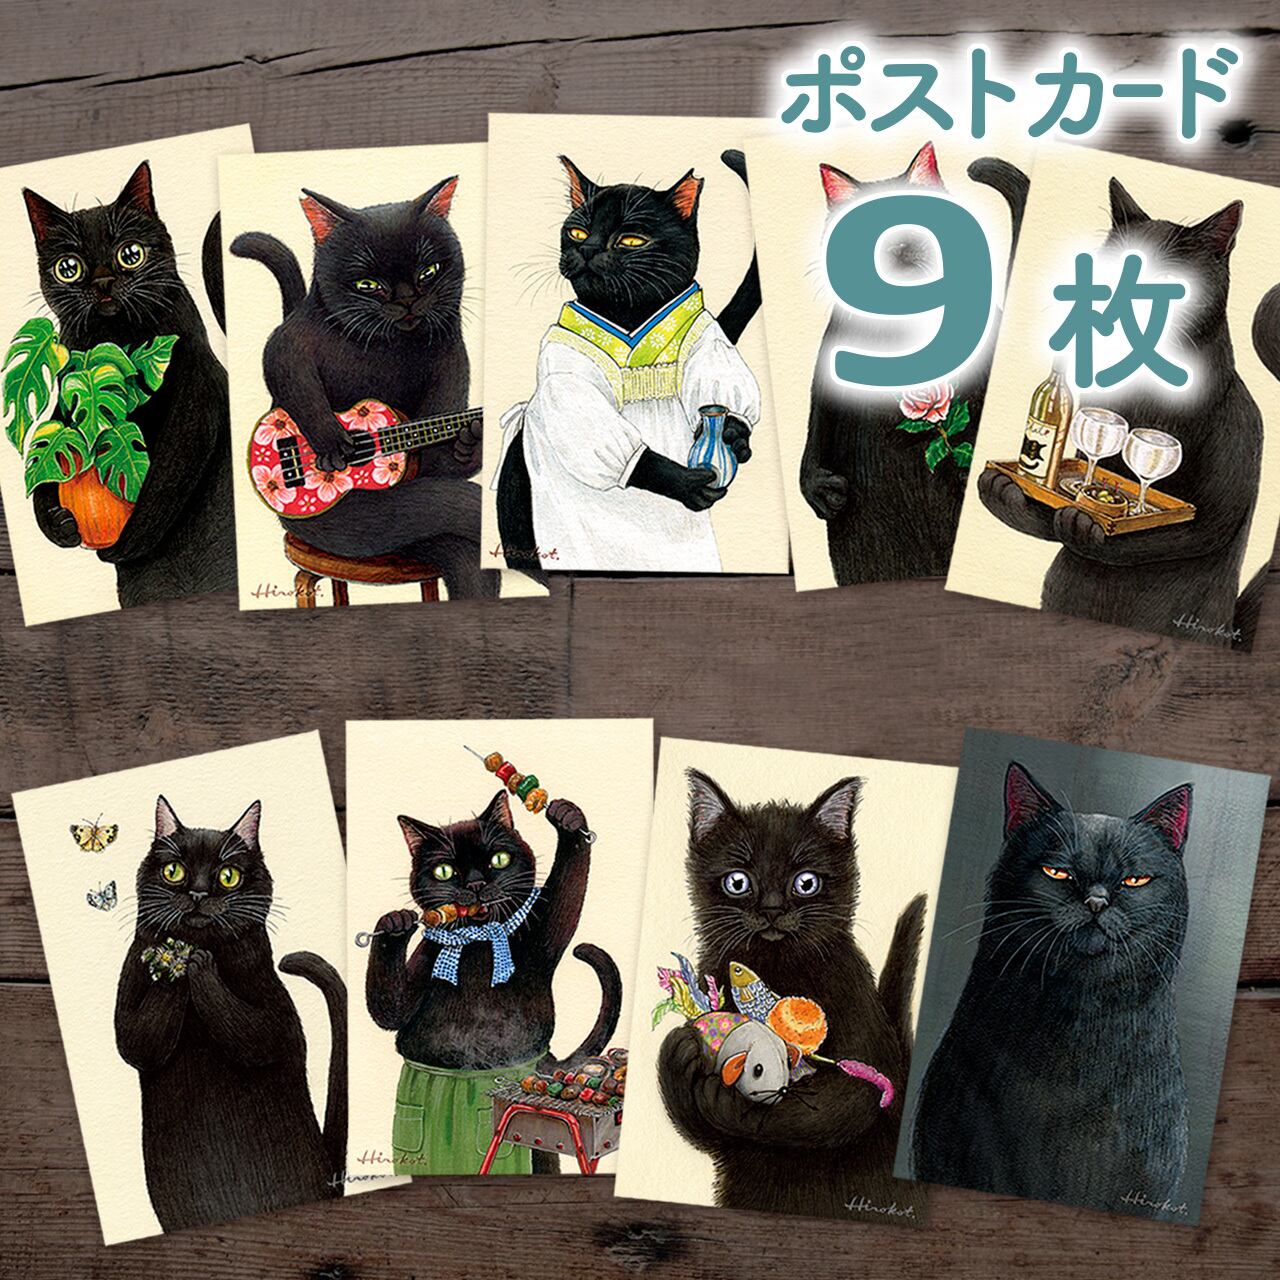 I❤︎黒猫!! ポストカードセット 9枚 / Black Cat Postcard Set of 9